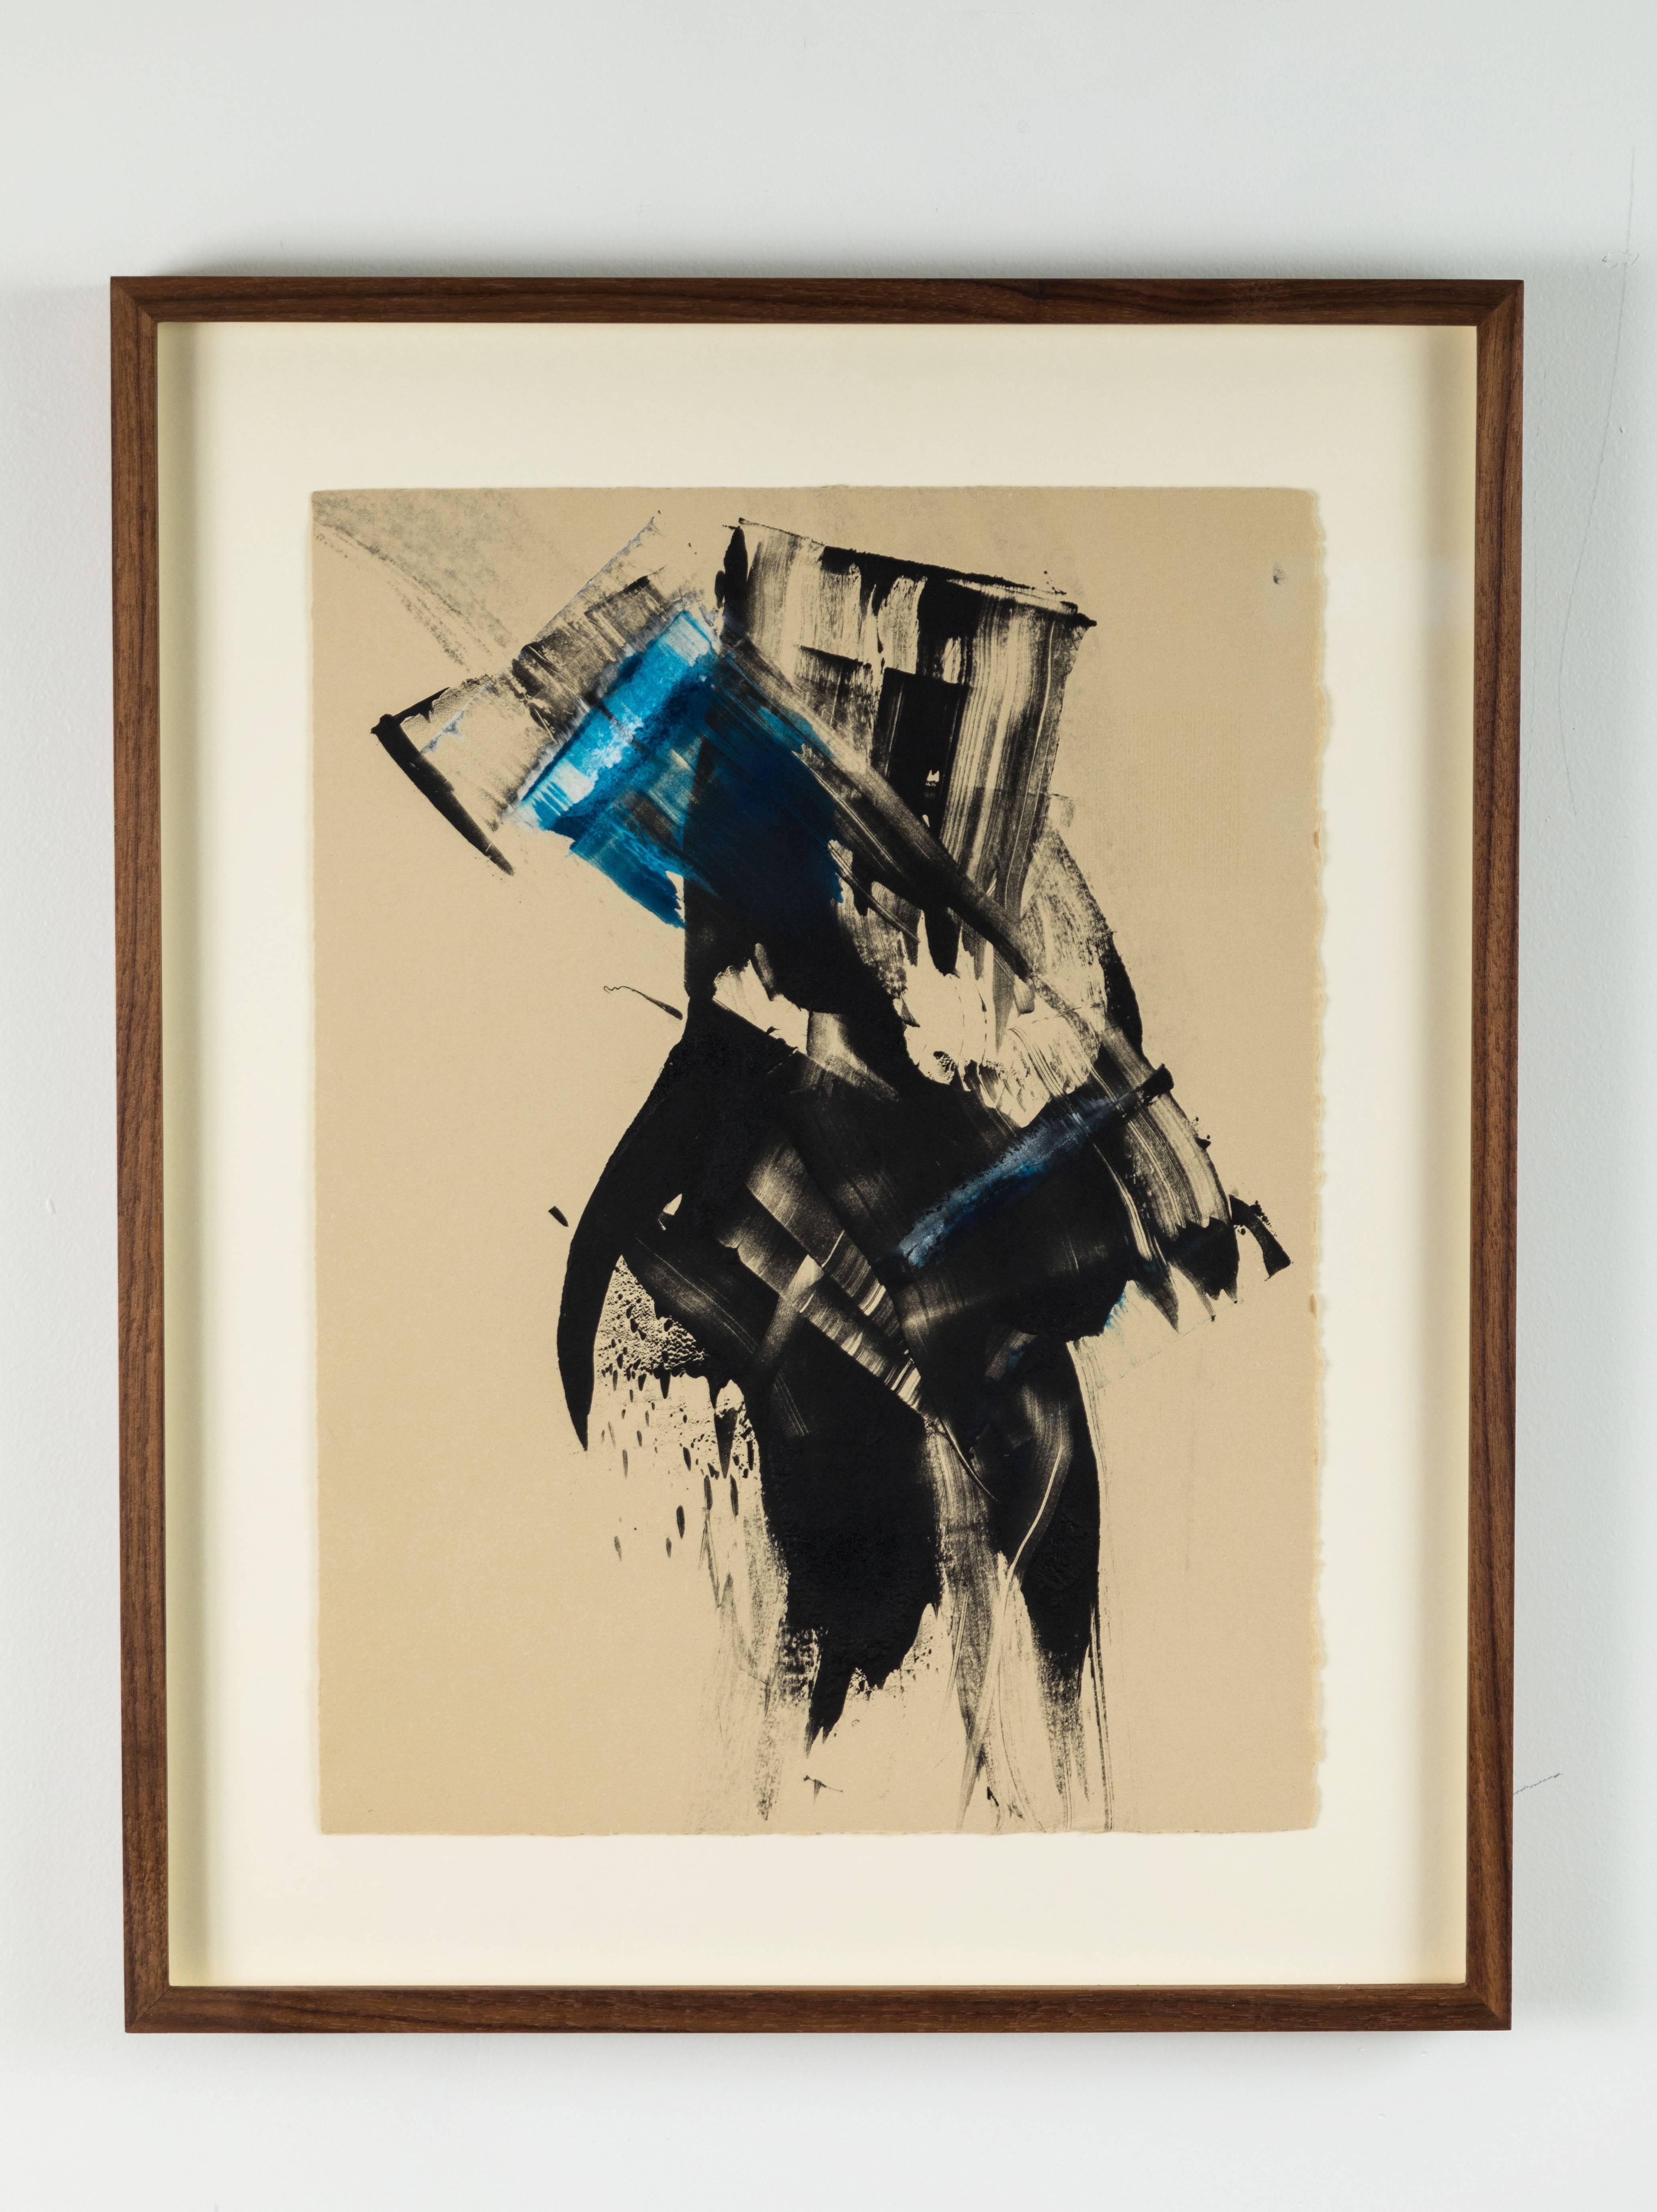 Blue black abstract monoprint by Anna Ullman.